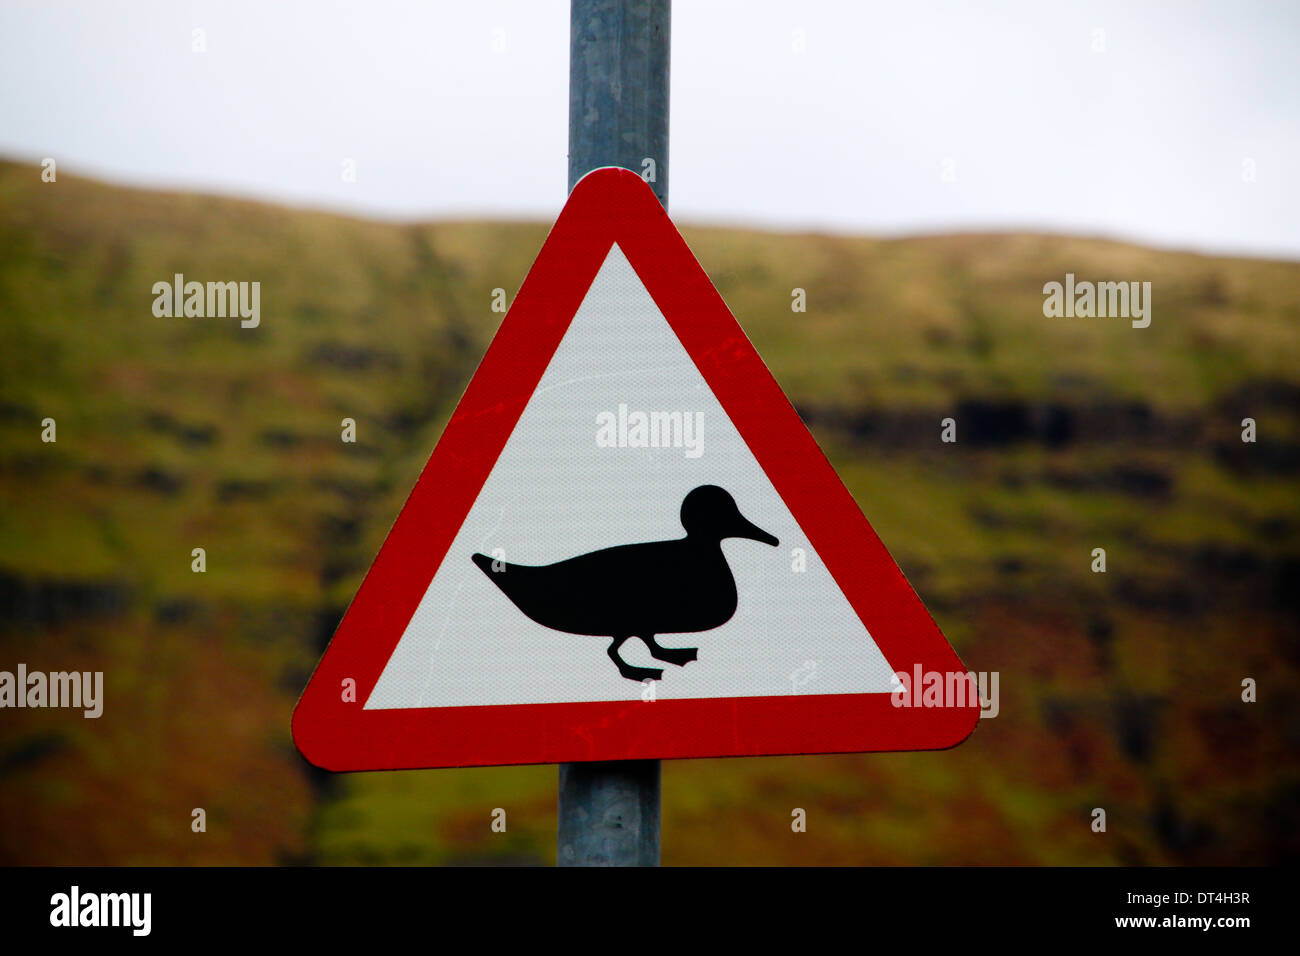 Ducks crossing warning road sign Stock Photo